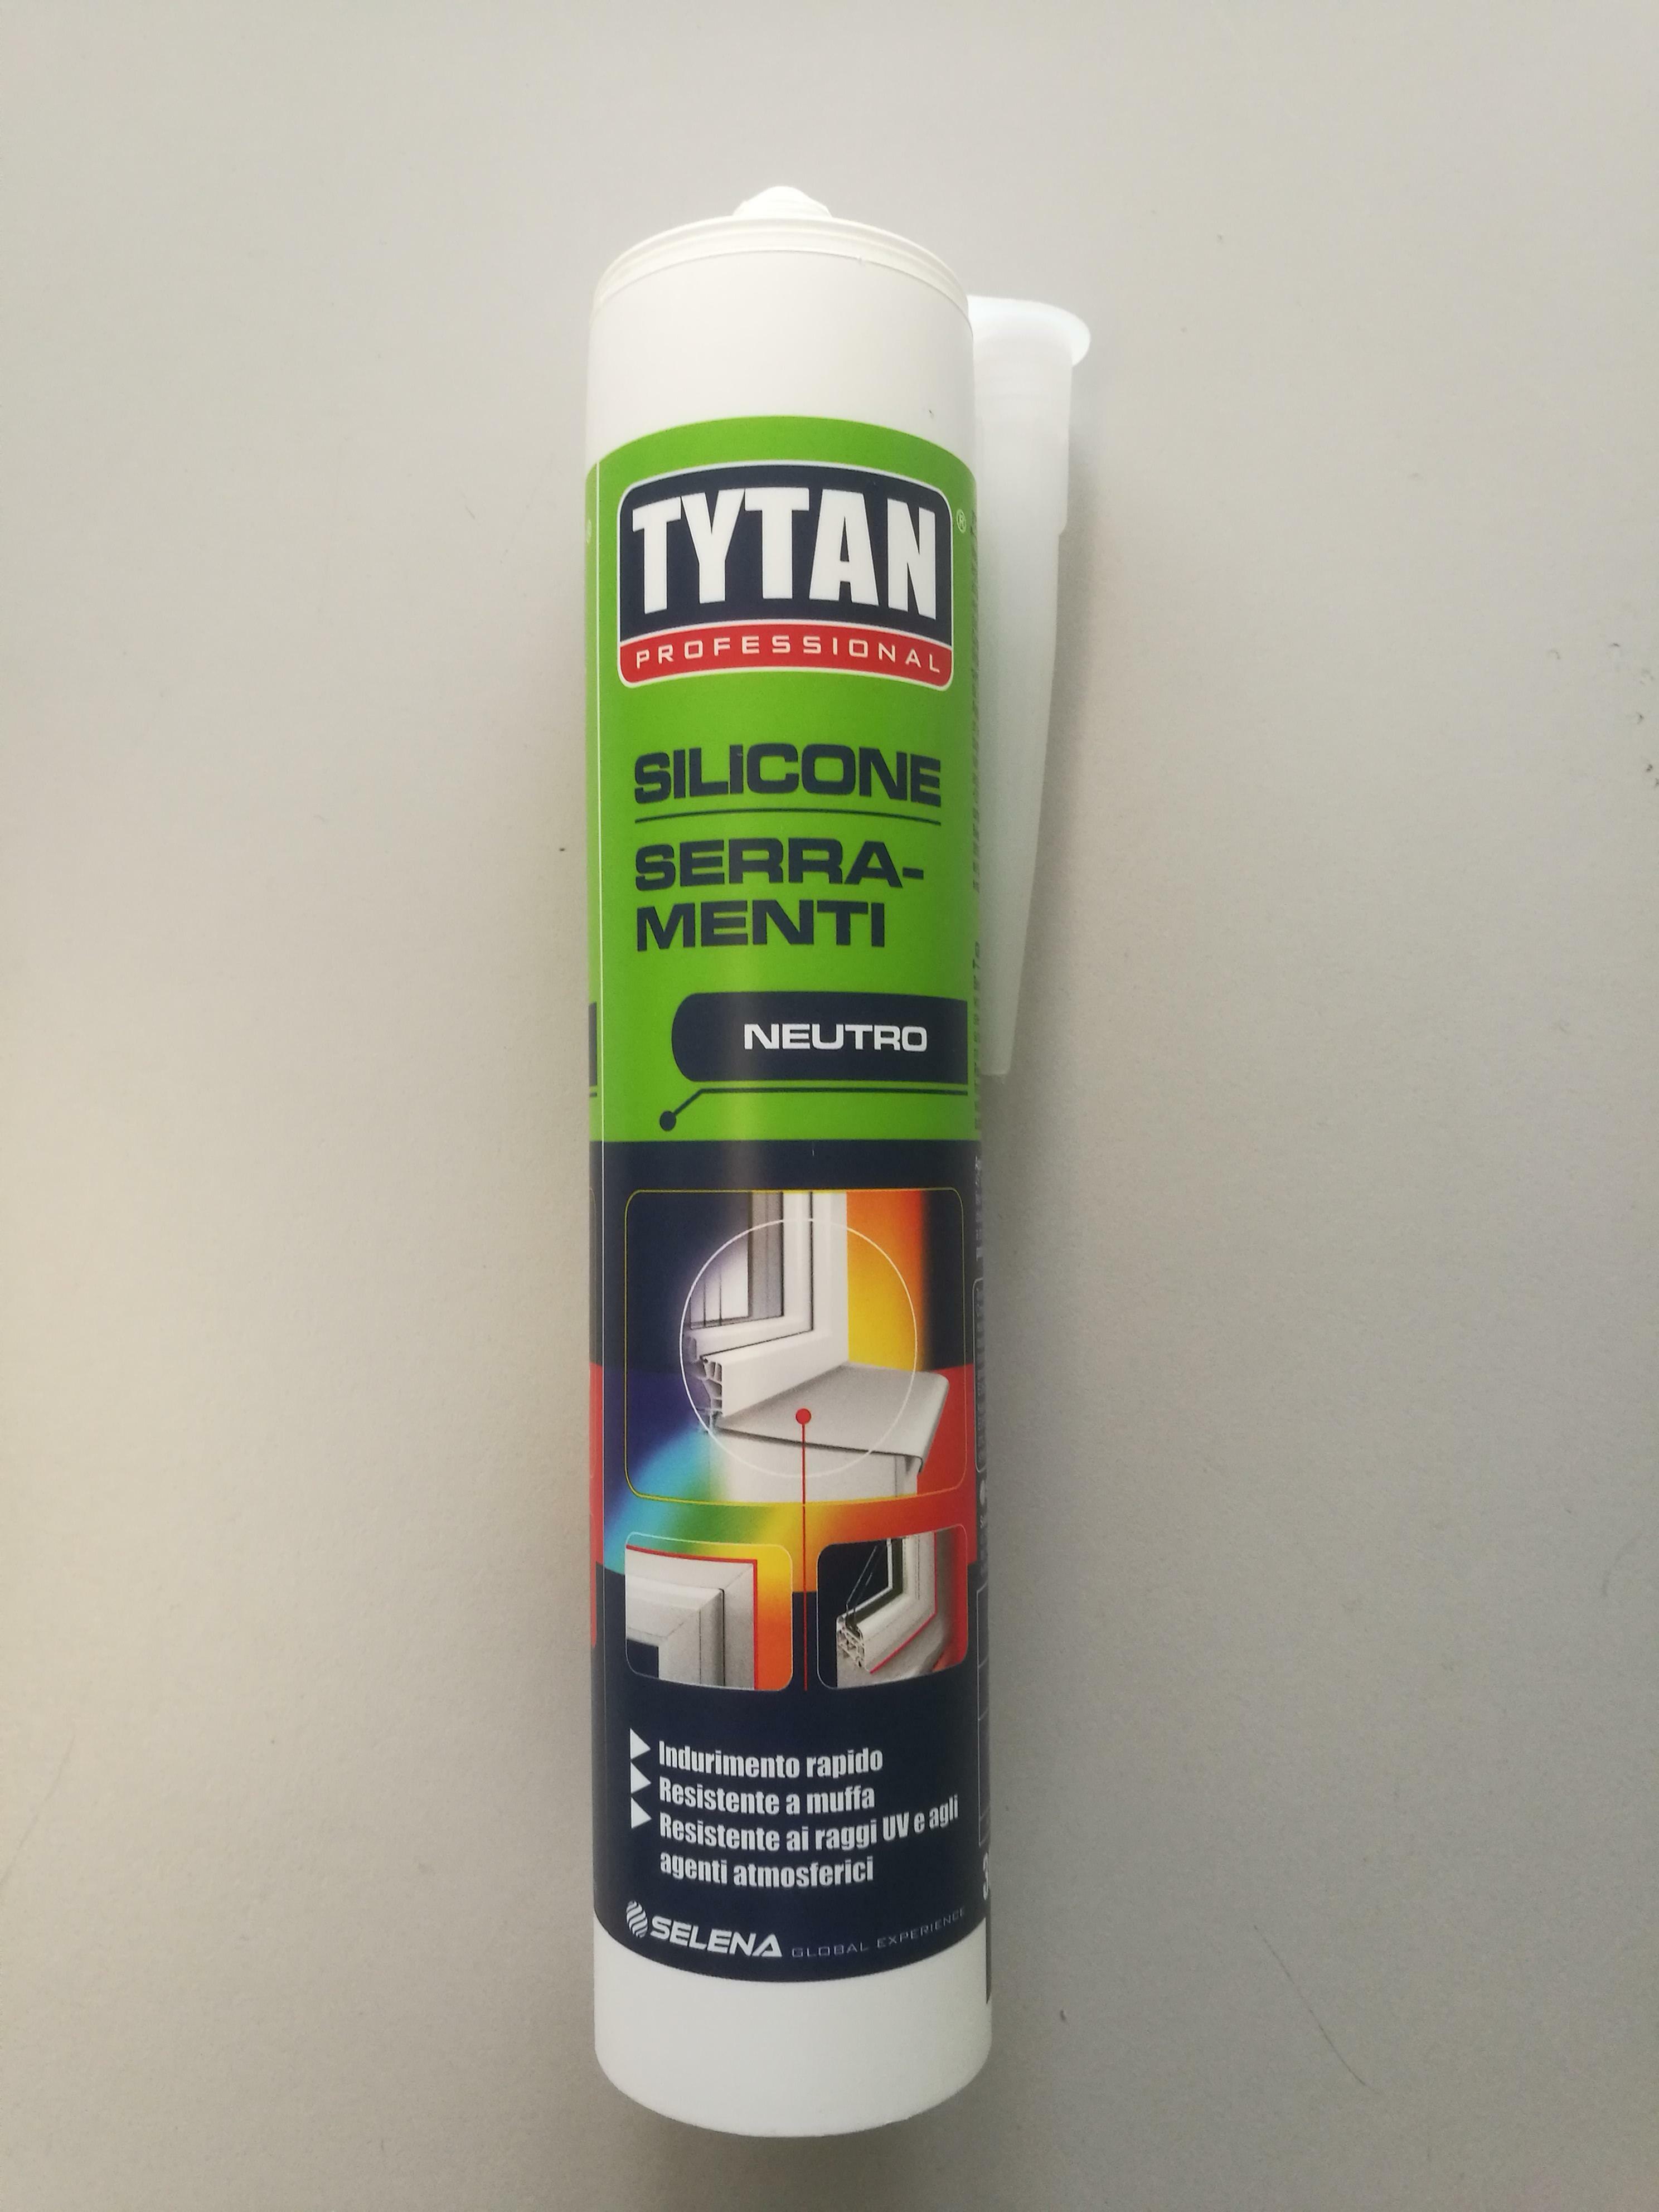 tytan professional tytan professional silicone neutro per serramenti bianco 300 ml